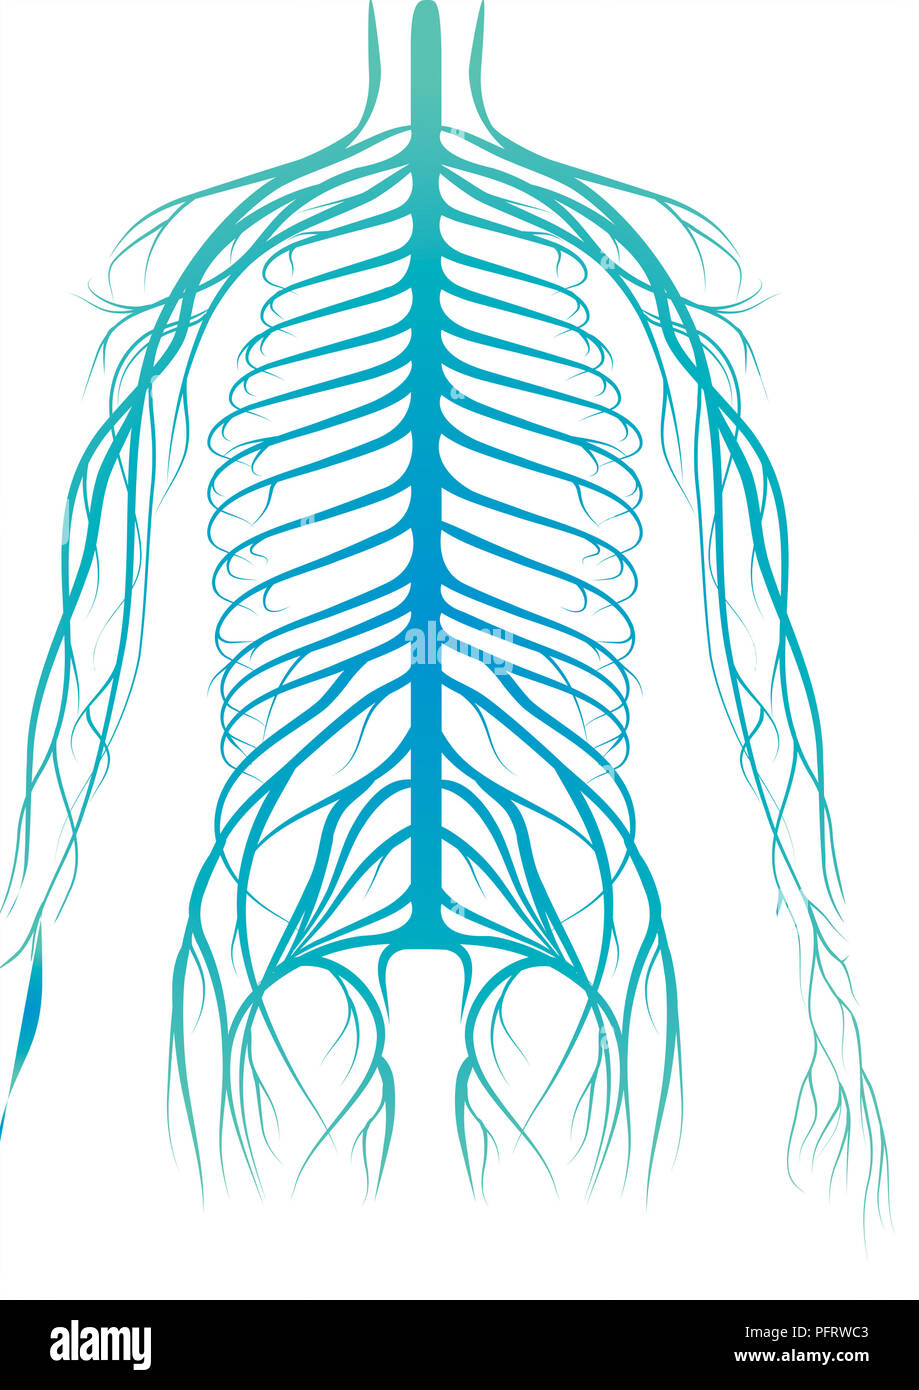 Illustration, human nervous system Stock Photo